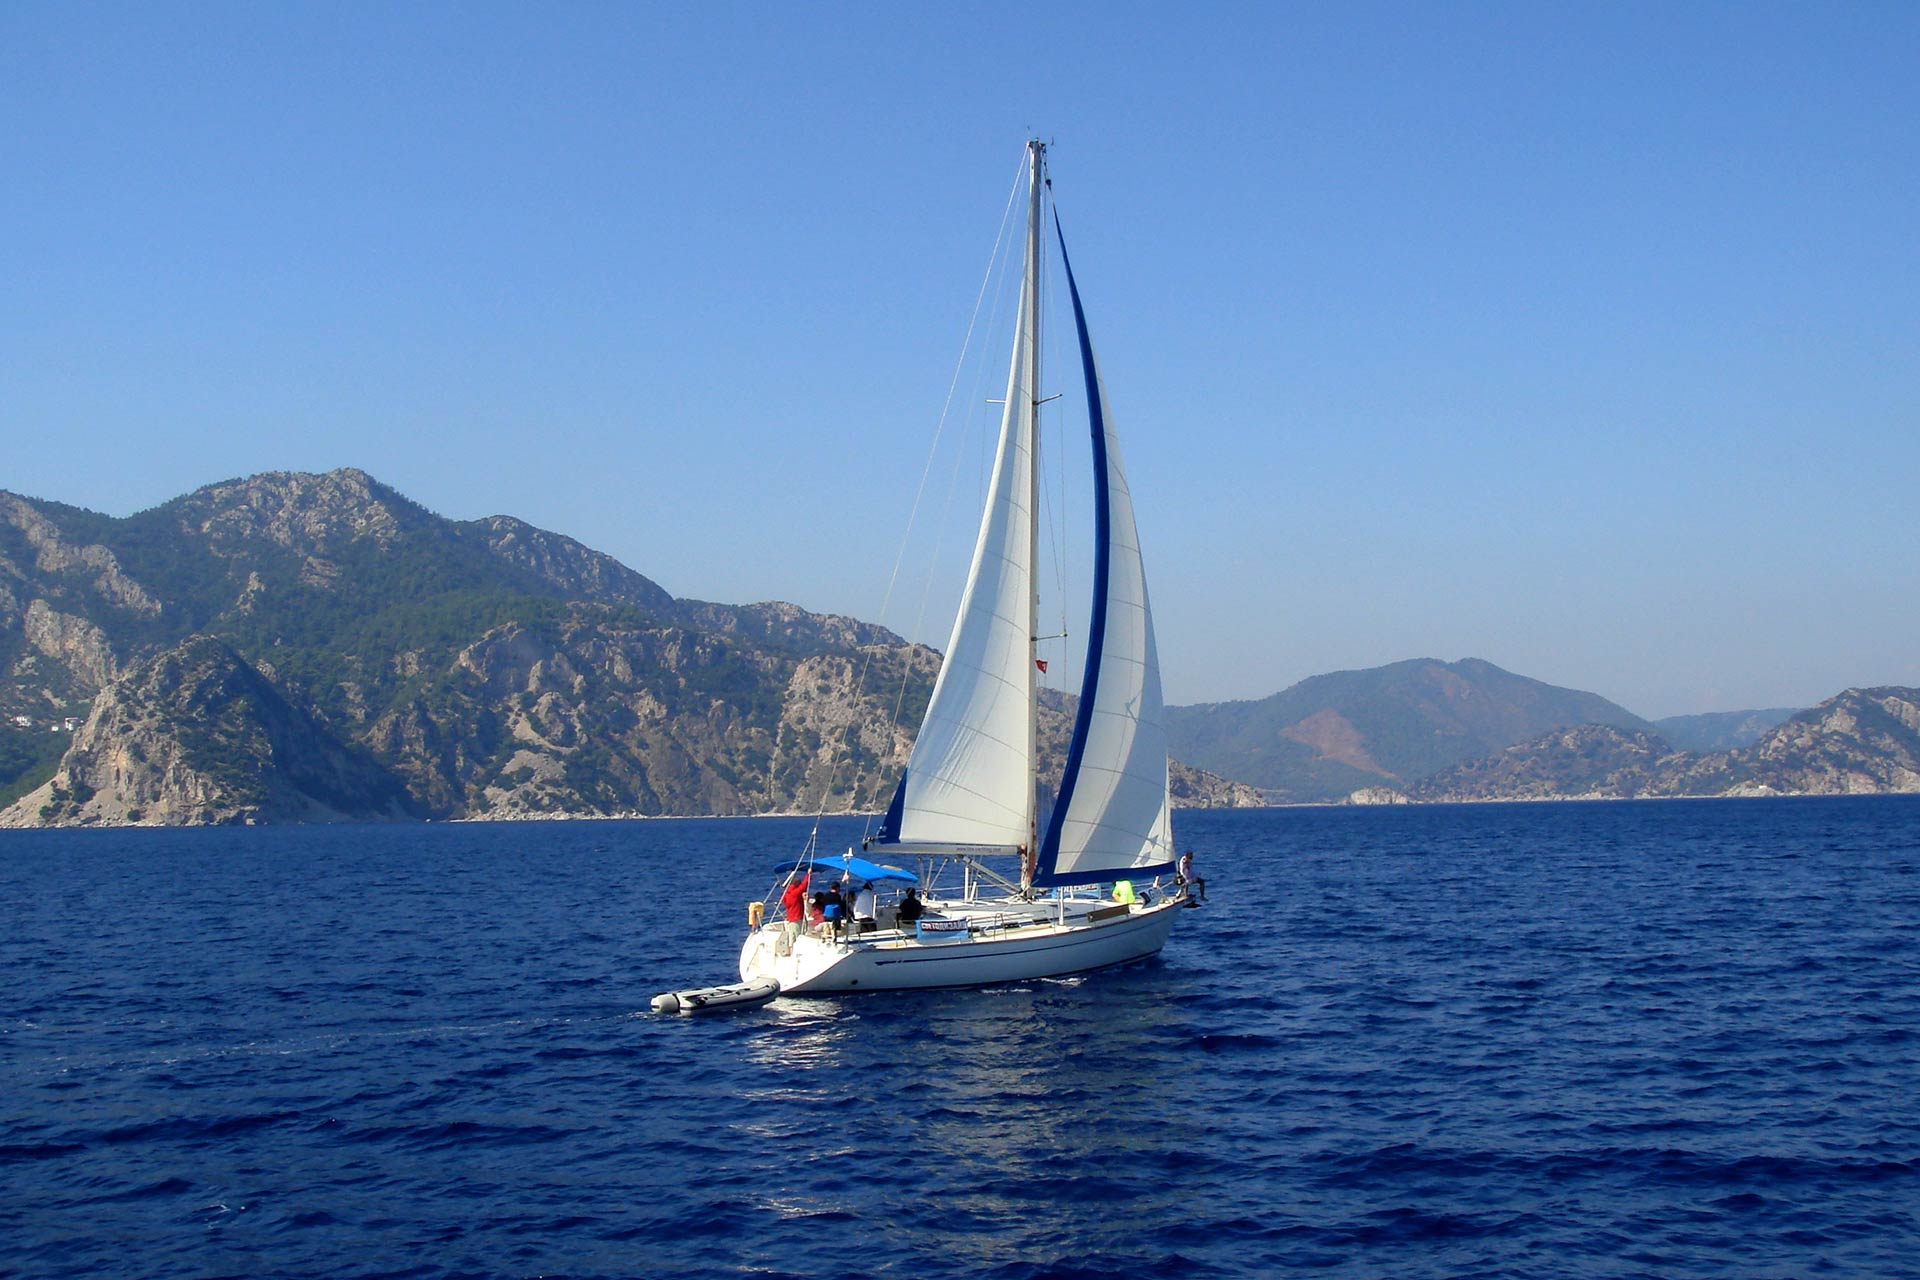 yacht-with-white-sail-sailing-on-a-calm-sea-on-a-b-2022-05-11-22-46-02-utc.jpg